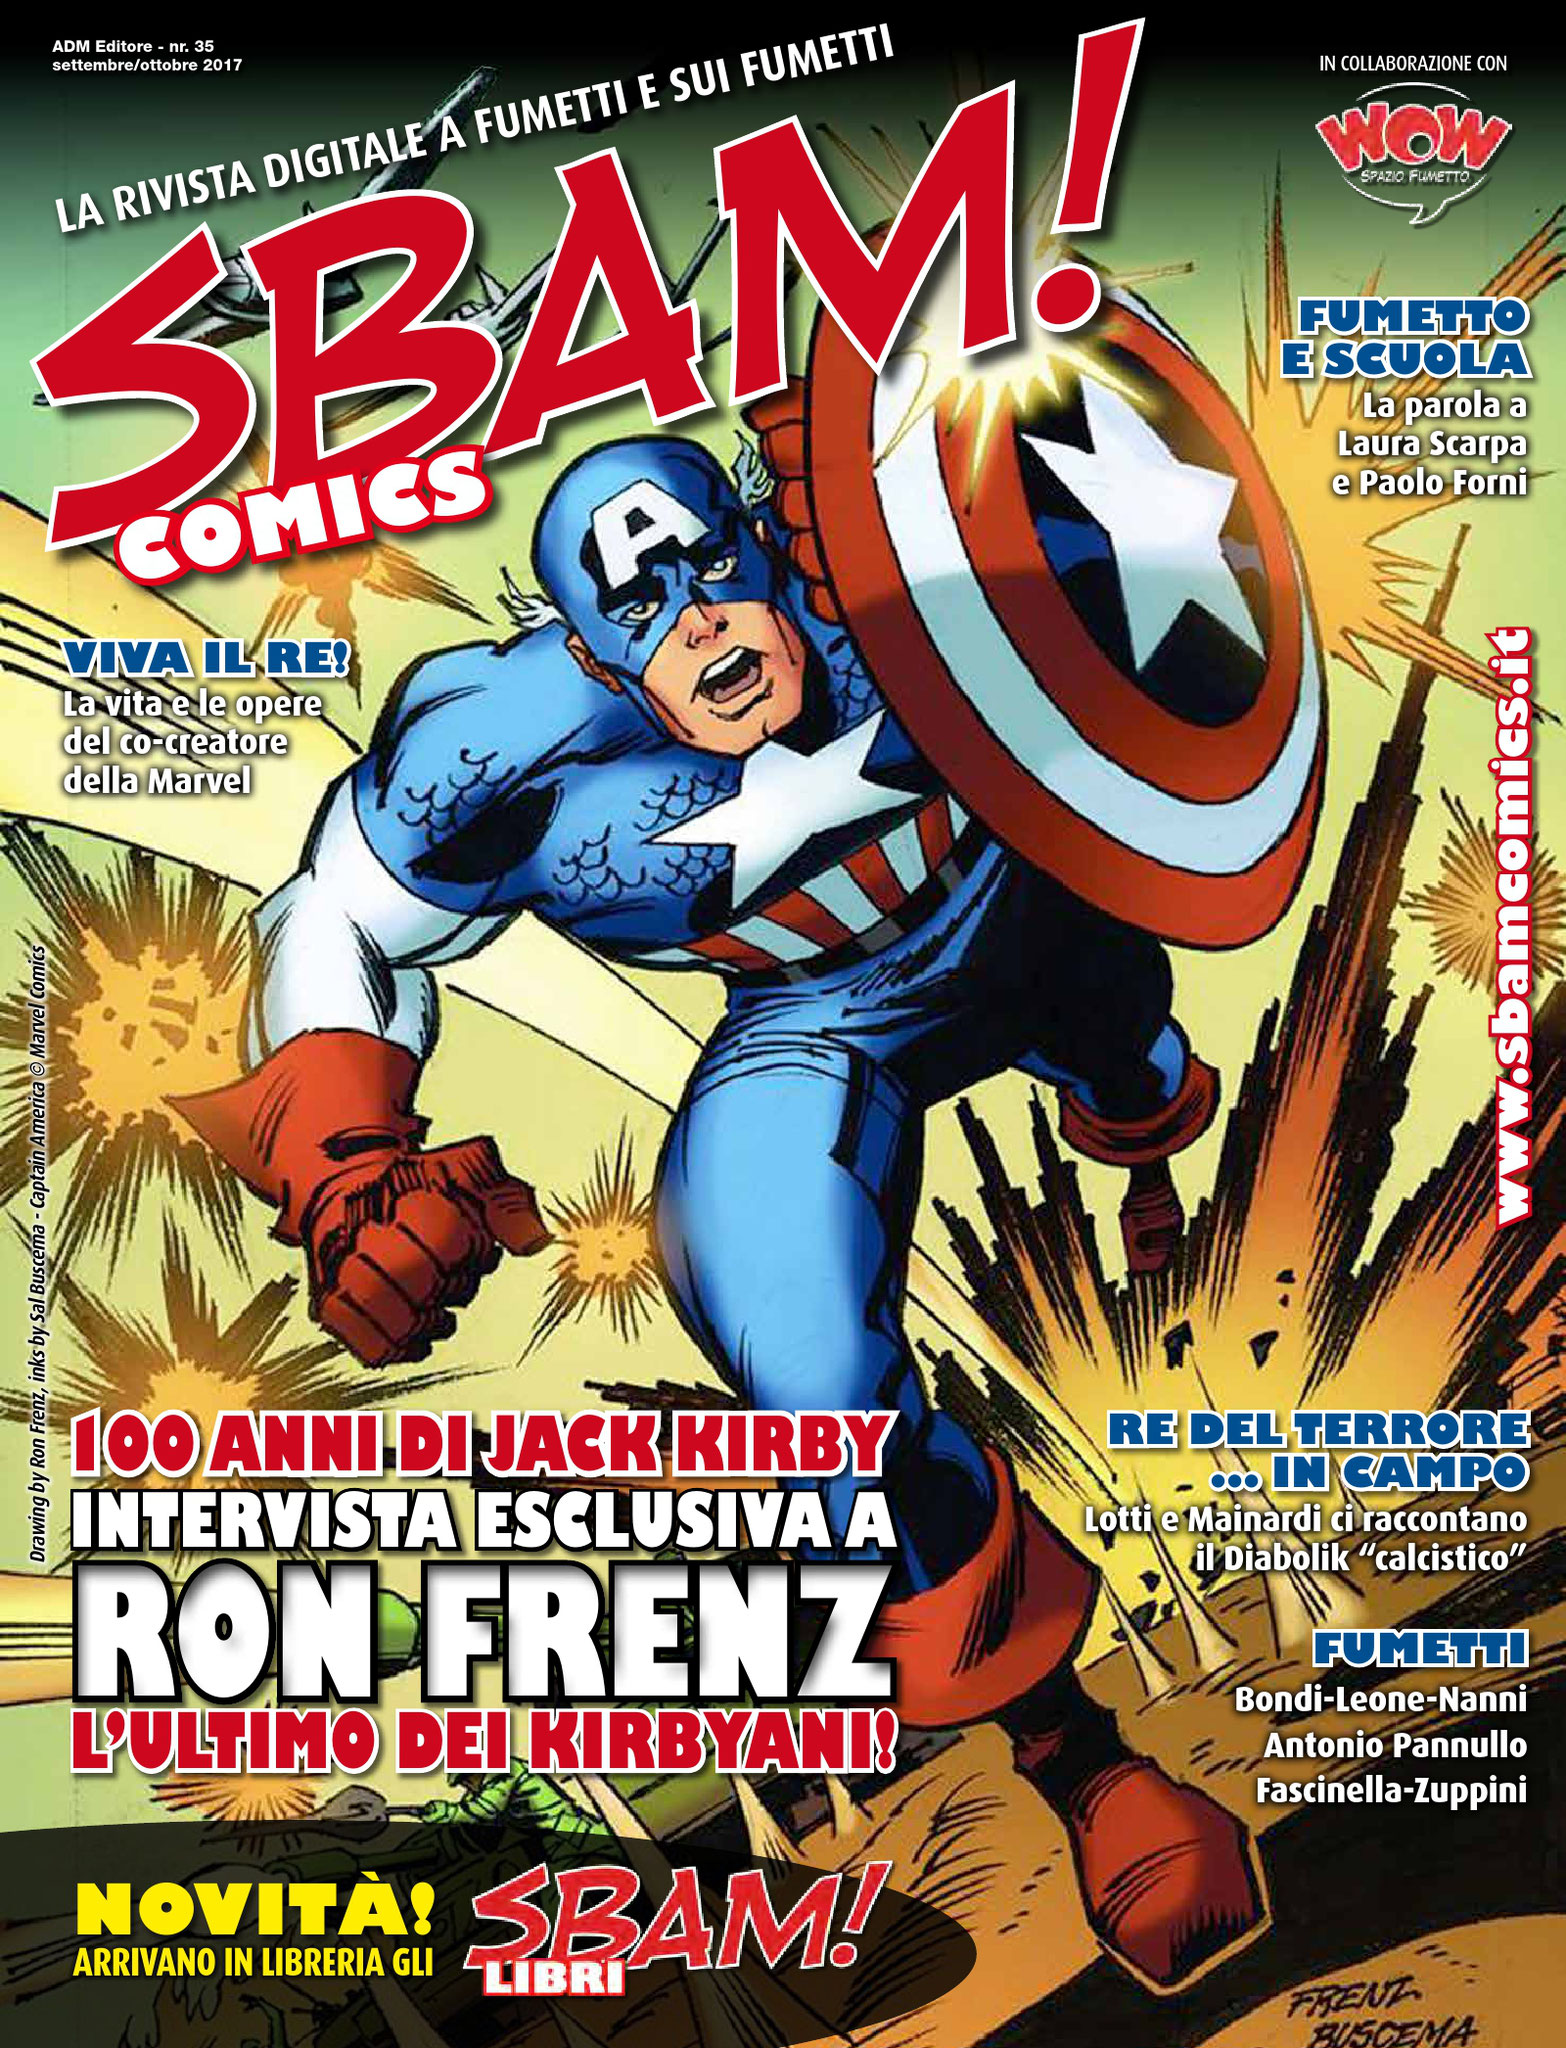 Sbam! Comics N.35 (Sbam! Comics) - 2017